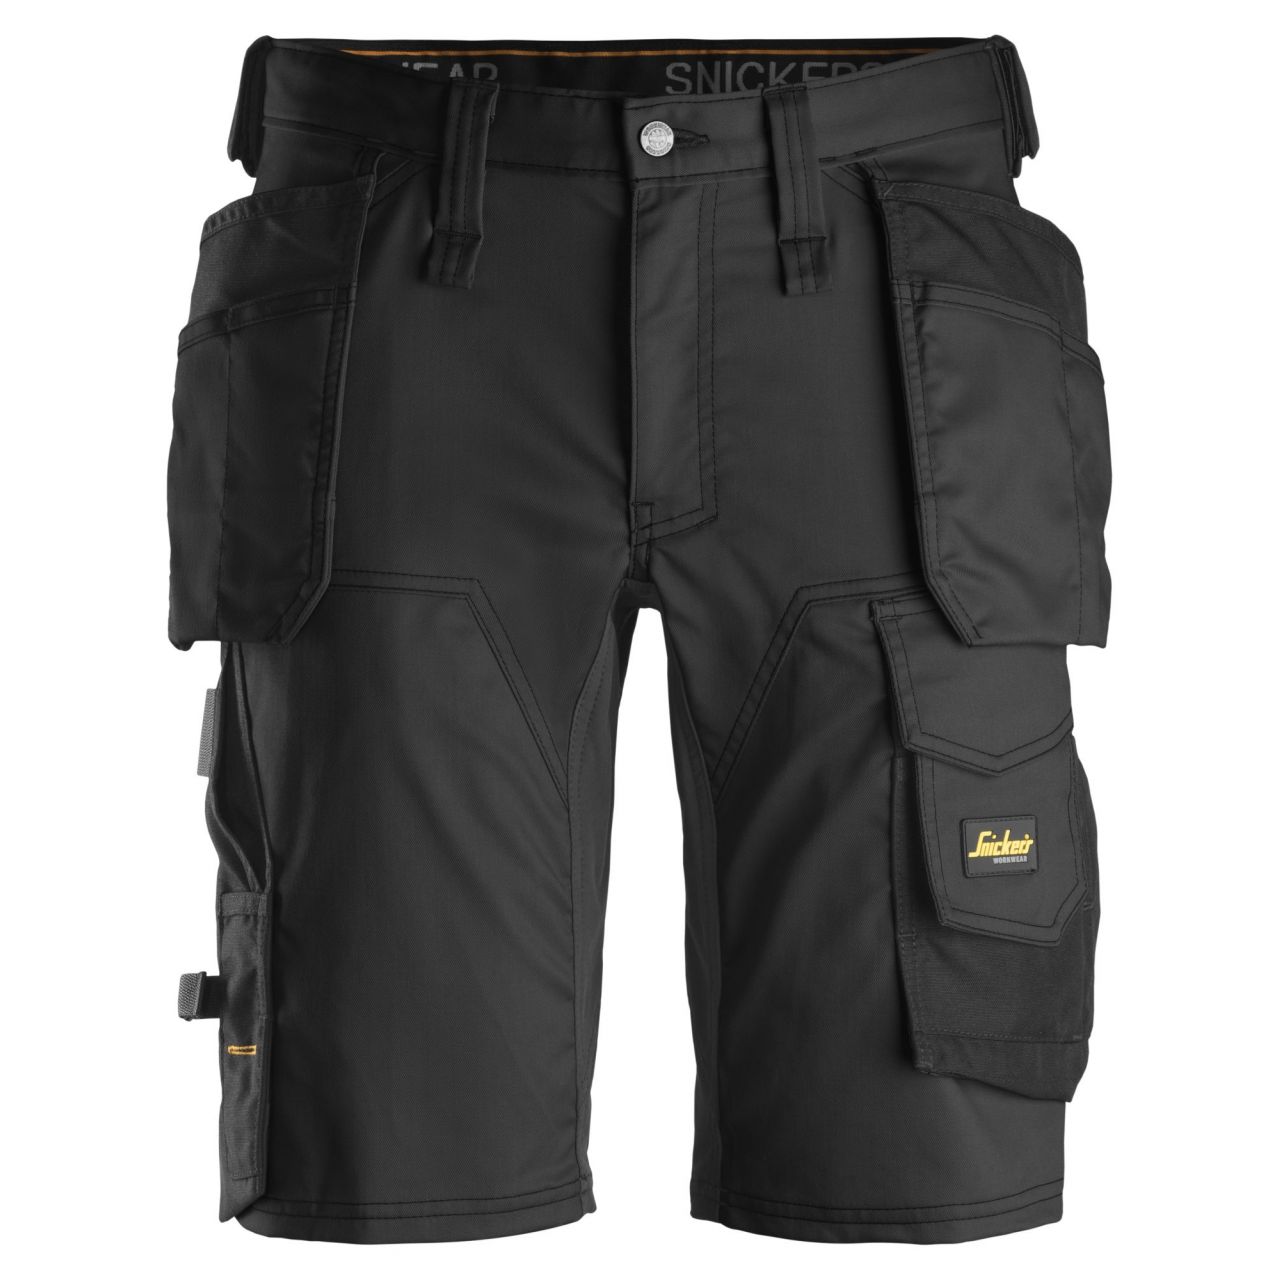 Pantalones cortos elásticos AllroundWork + Bolsillos Flotantes Negro talla 60